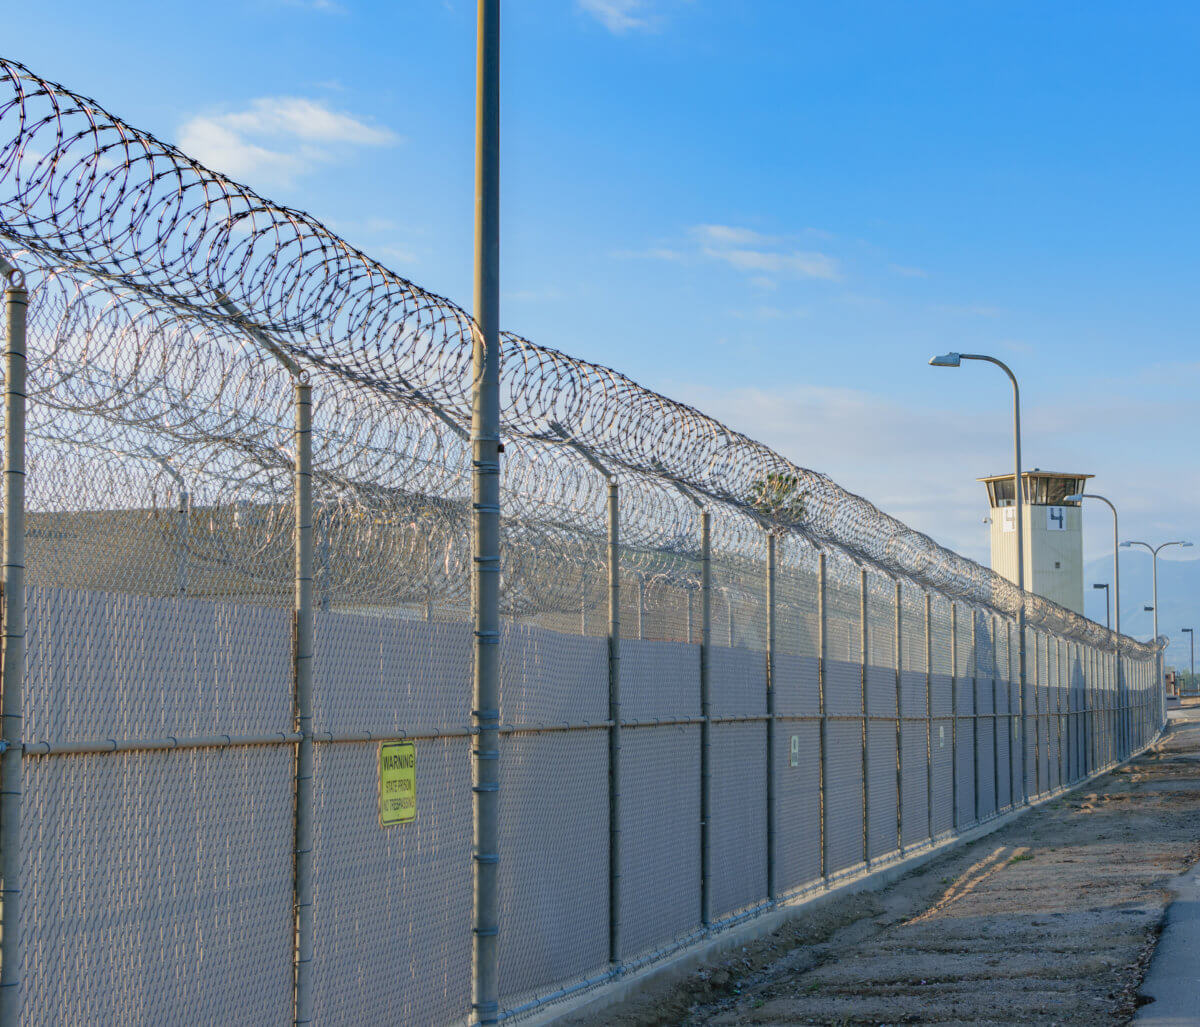 West prison wall